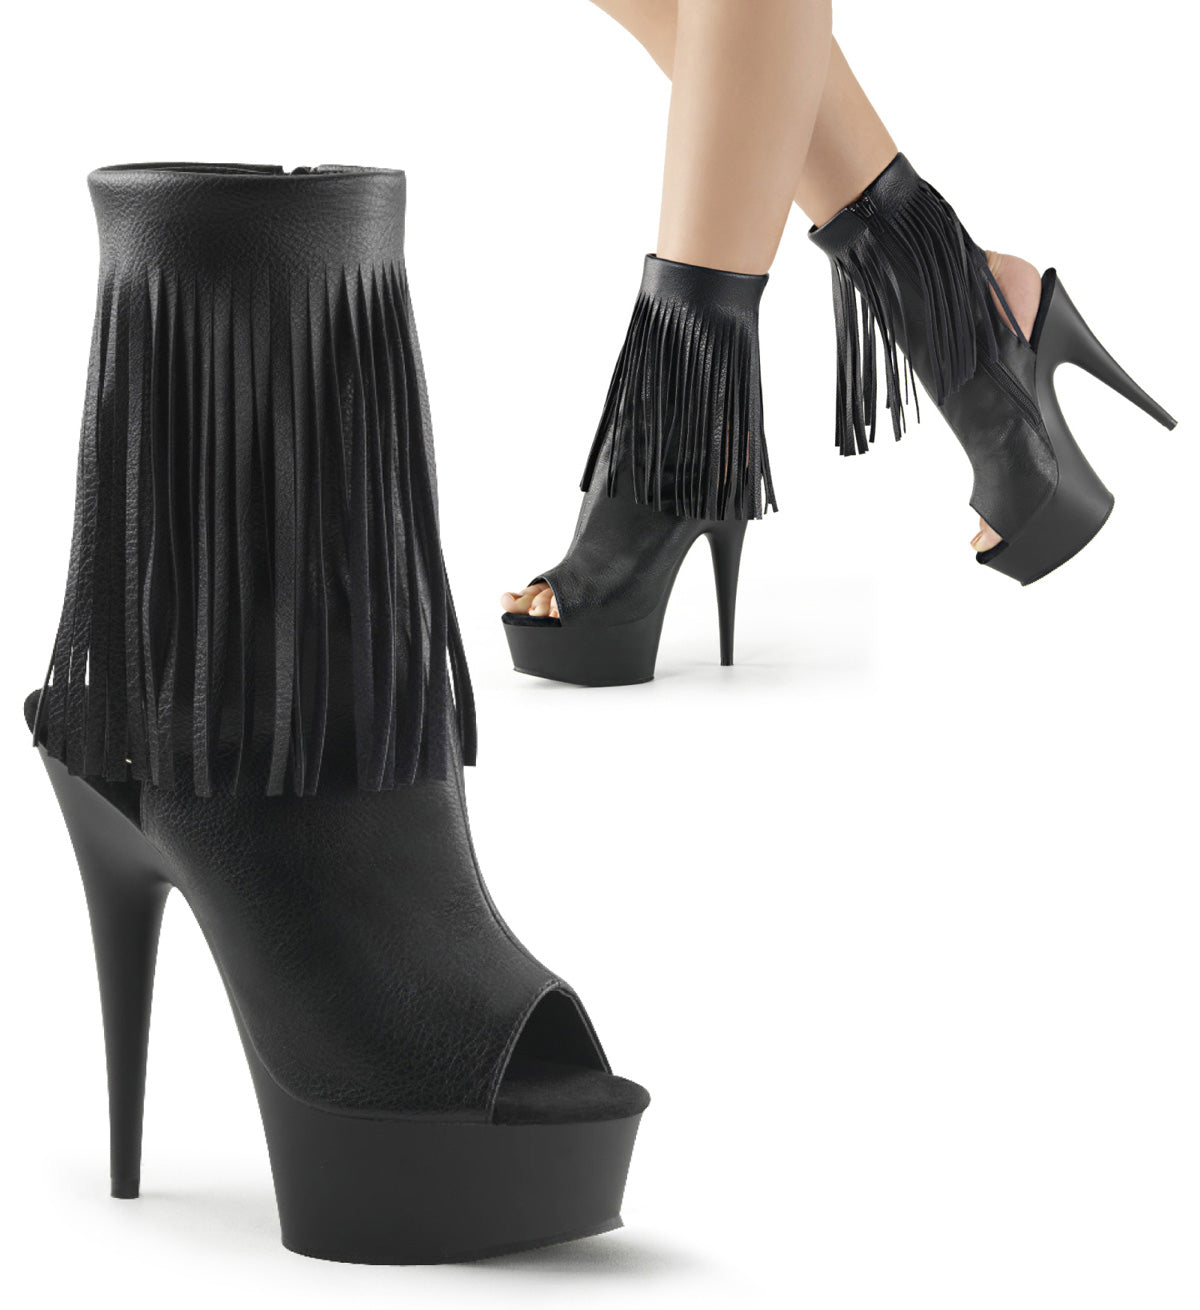 DELIGHT-1019 Pleaser 6 Inch Heel Black Pole Dancer Platforms-Pleaser- Sexy Shoes